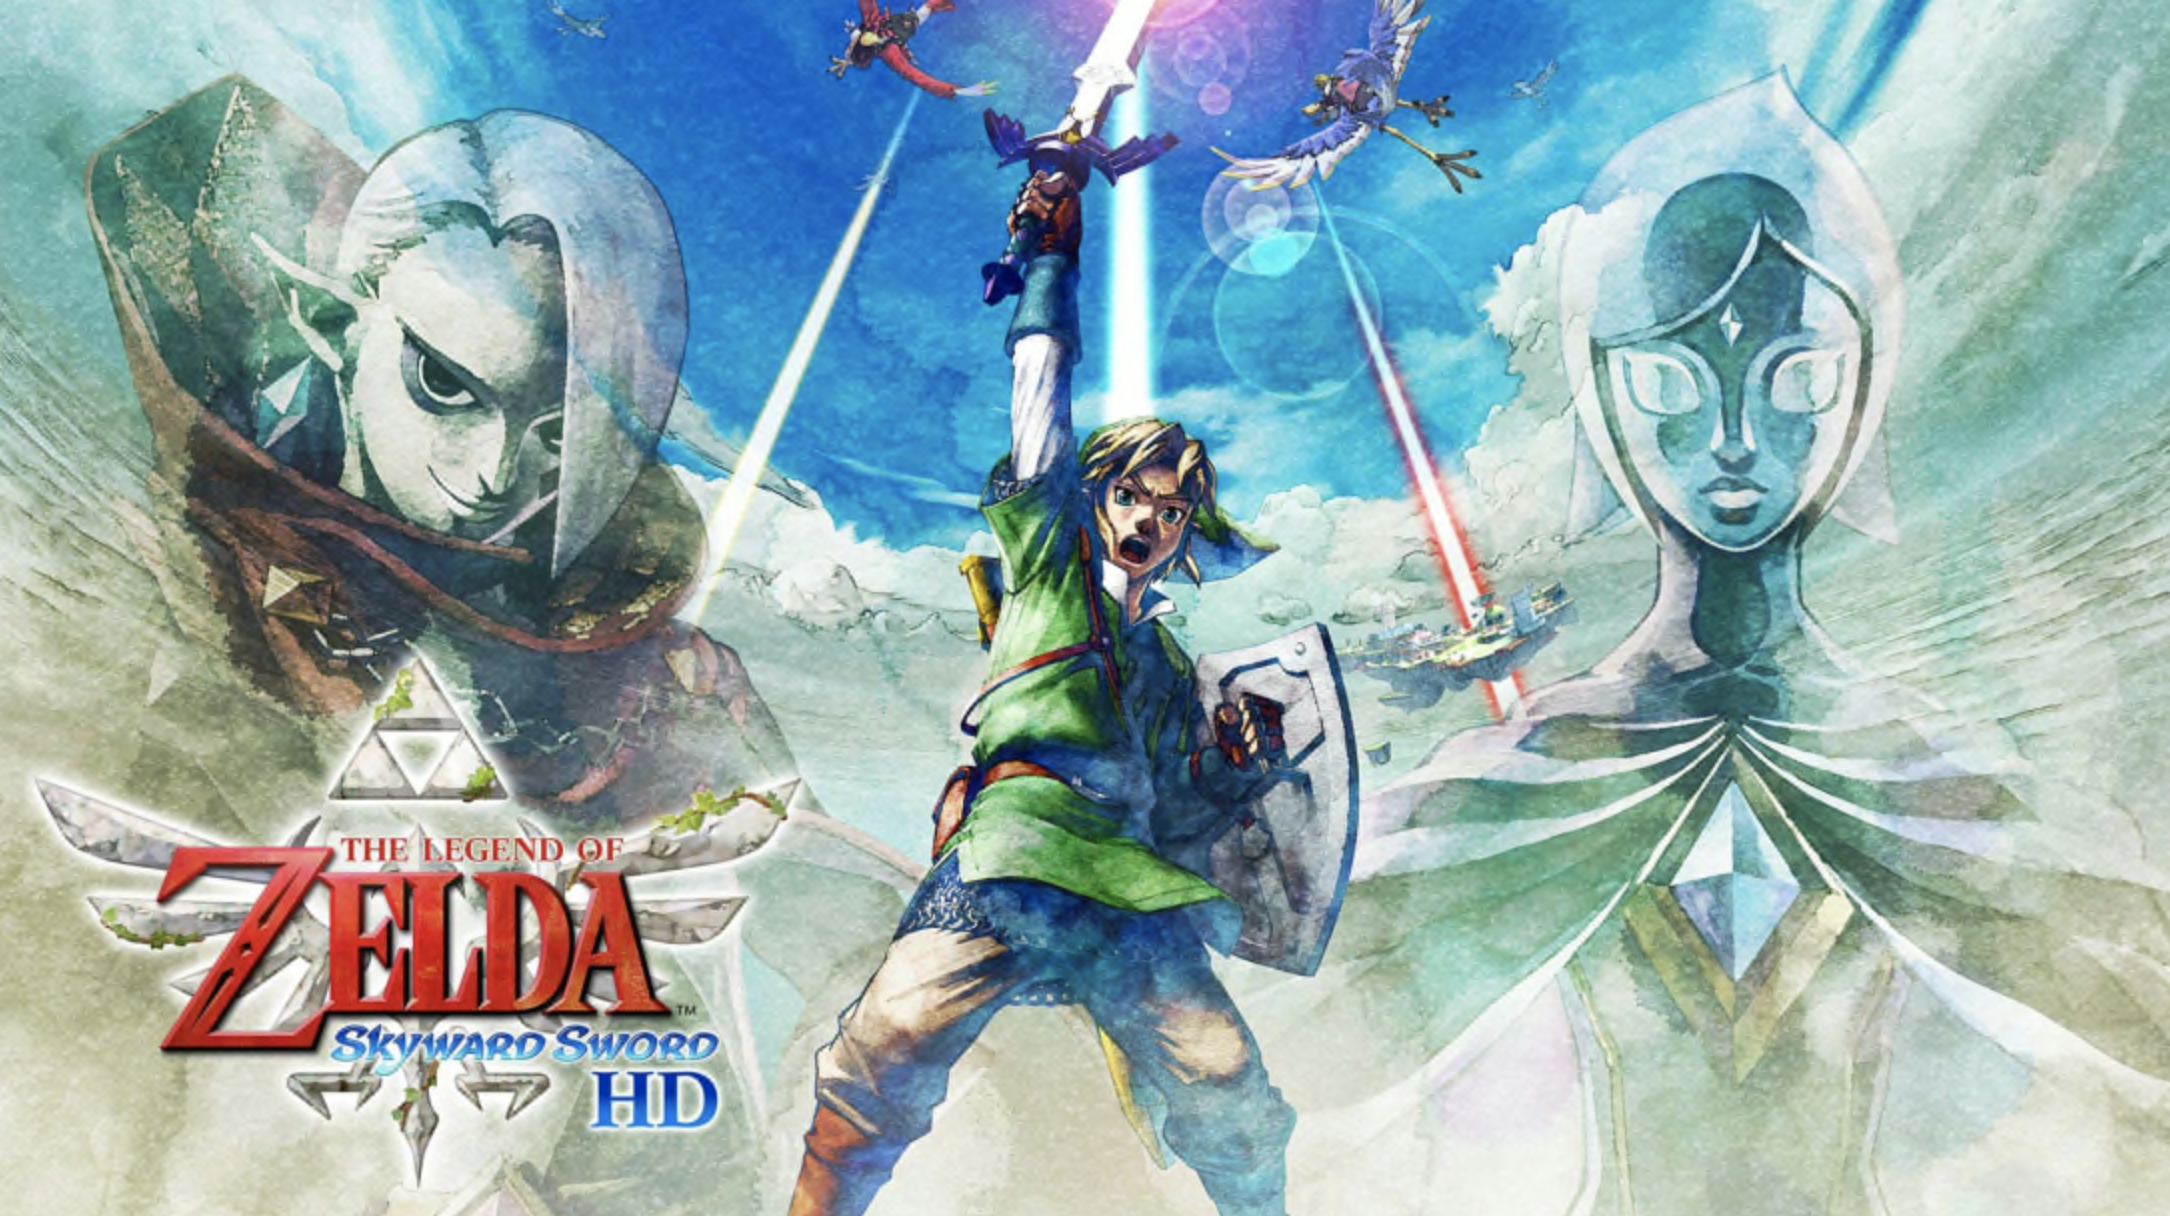 The Legend of Zelda: Skyward Sword HD - Switch Review